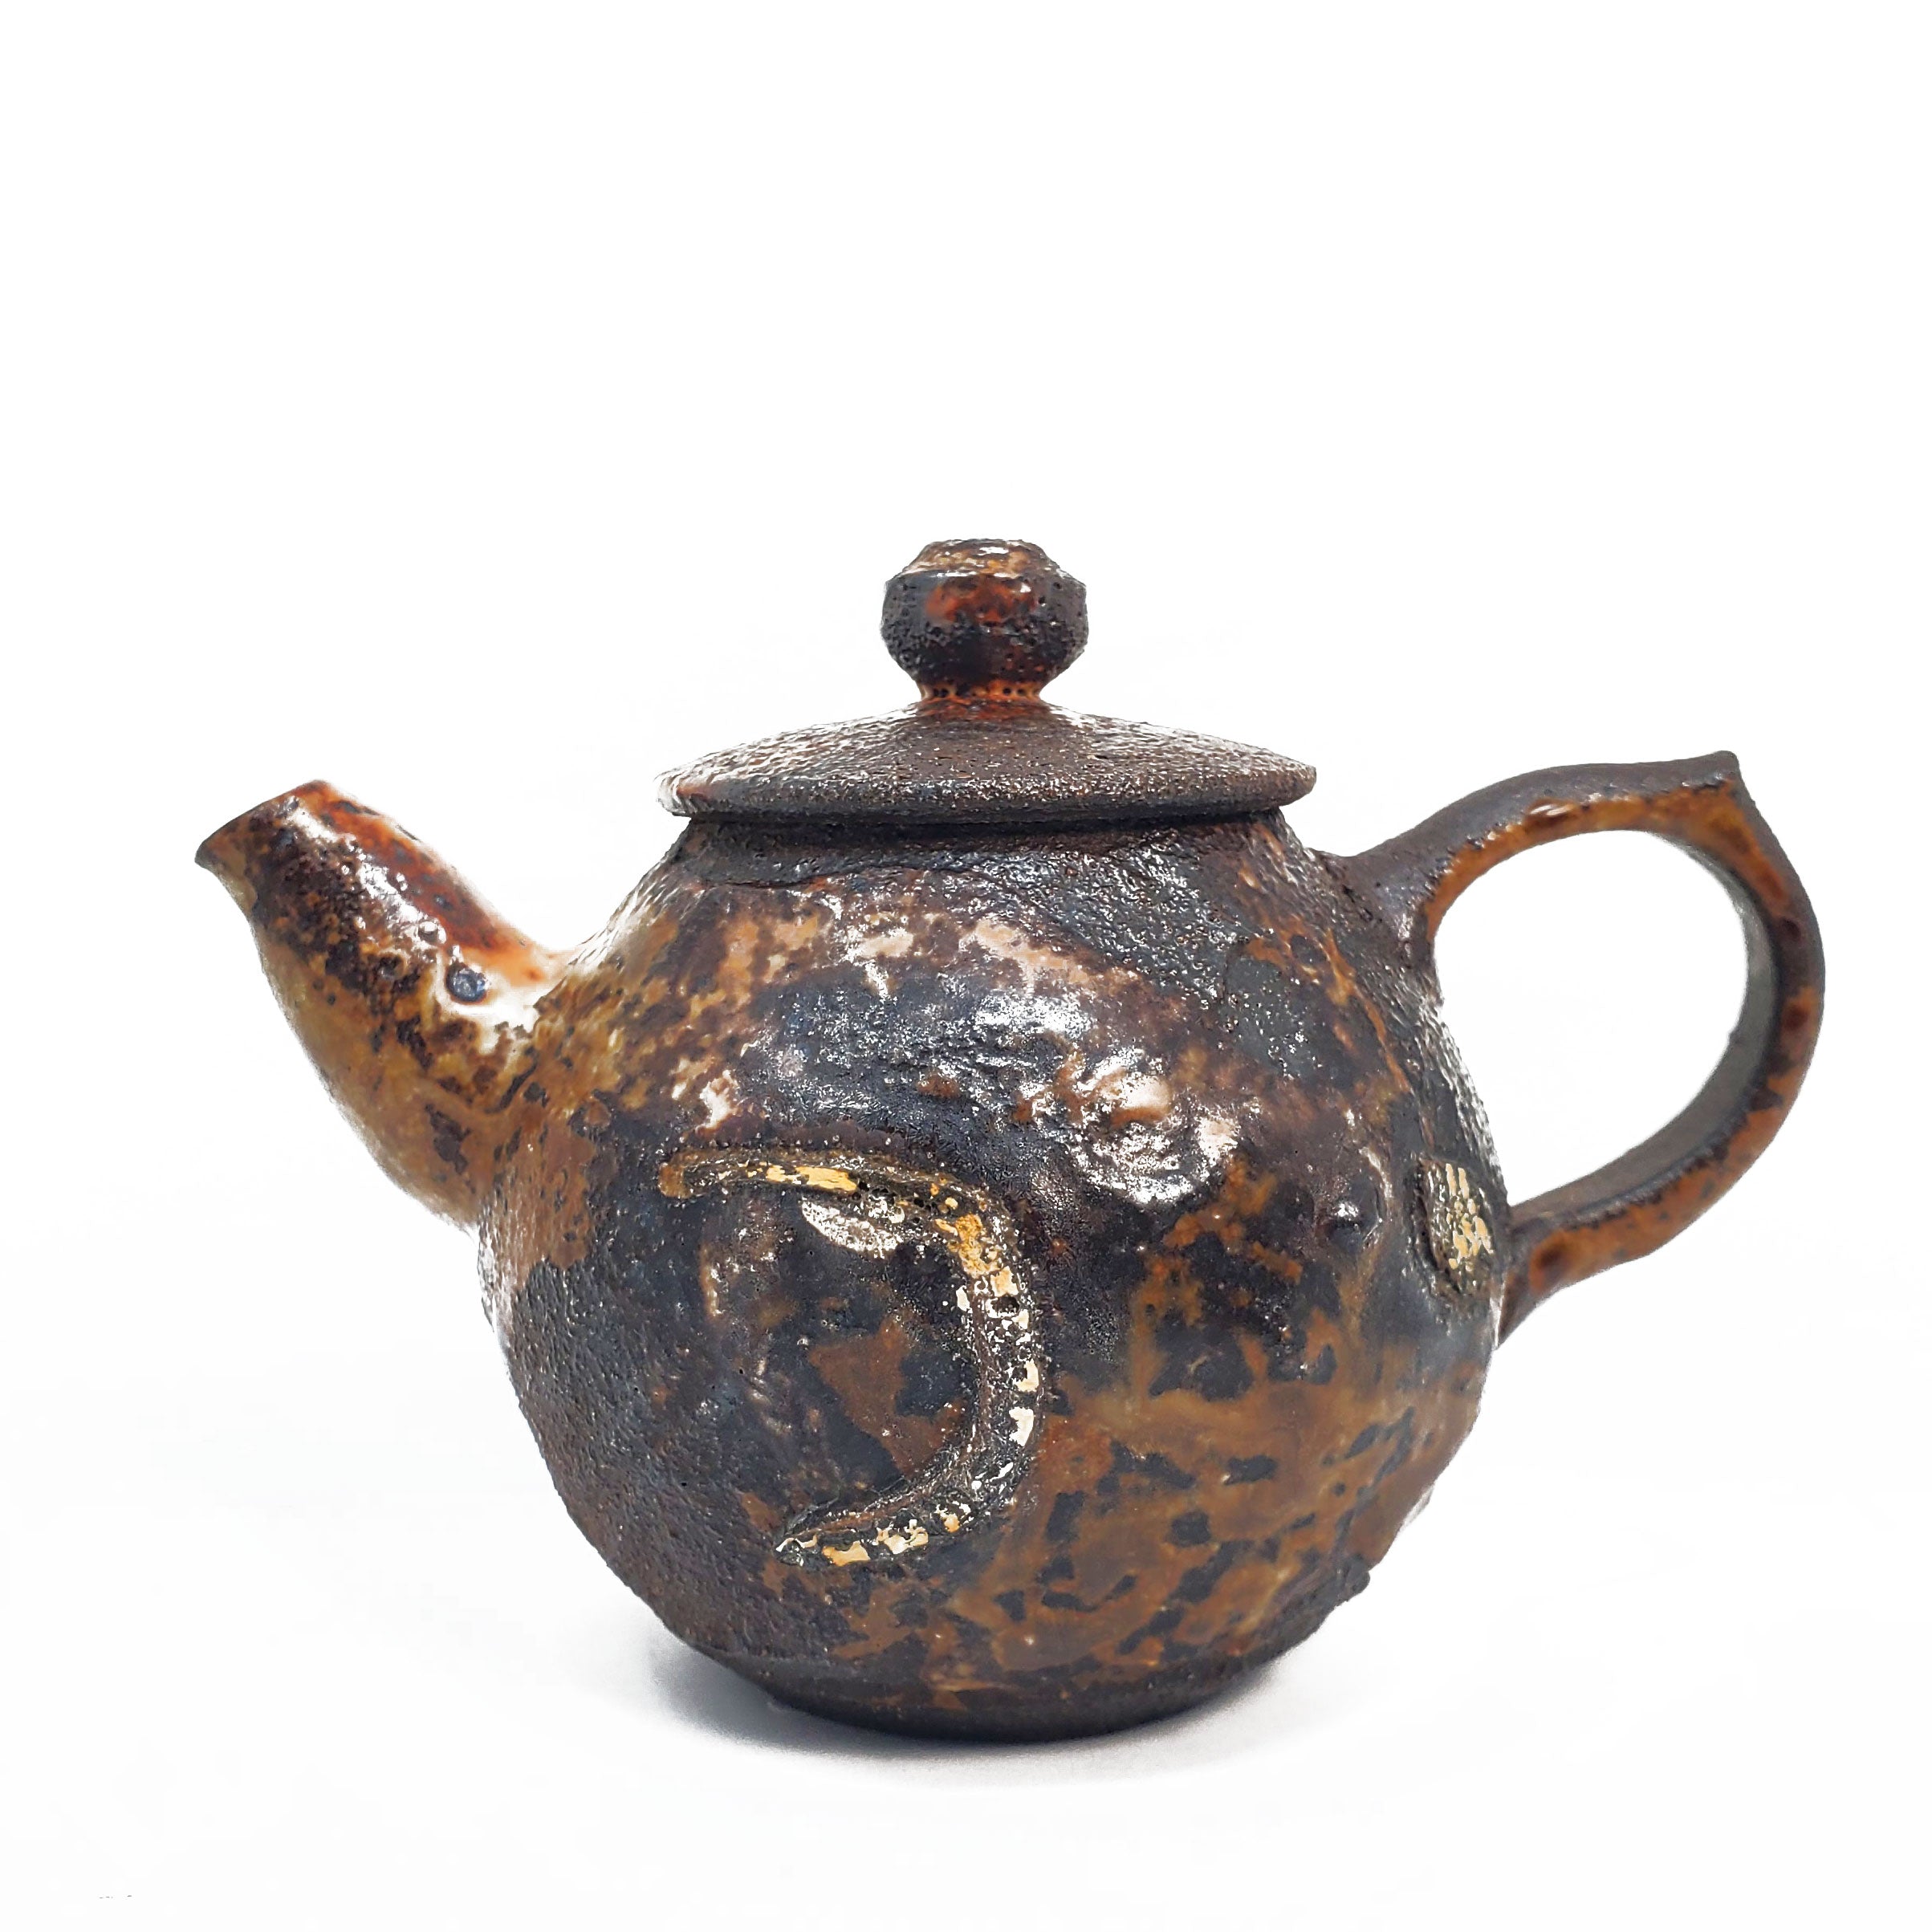 Wood-fired Rustic Teapot